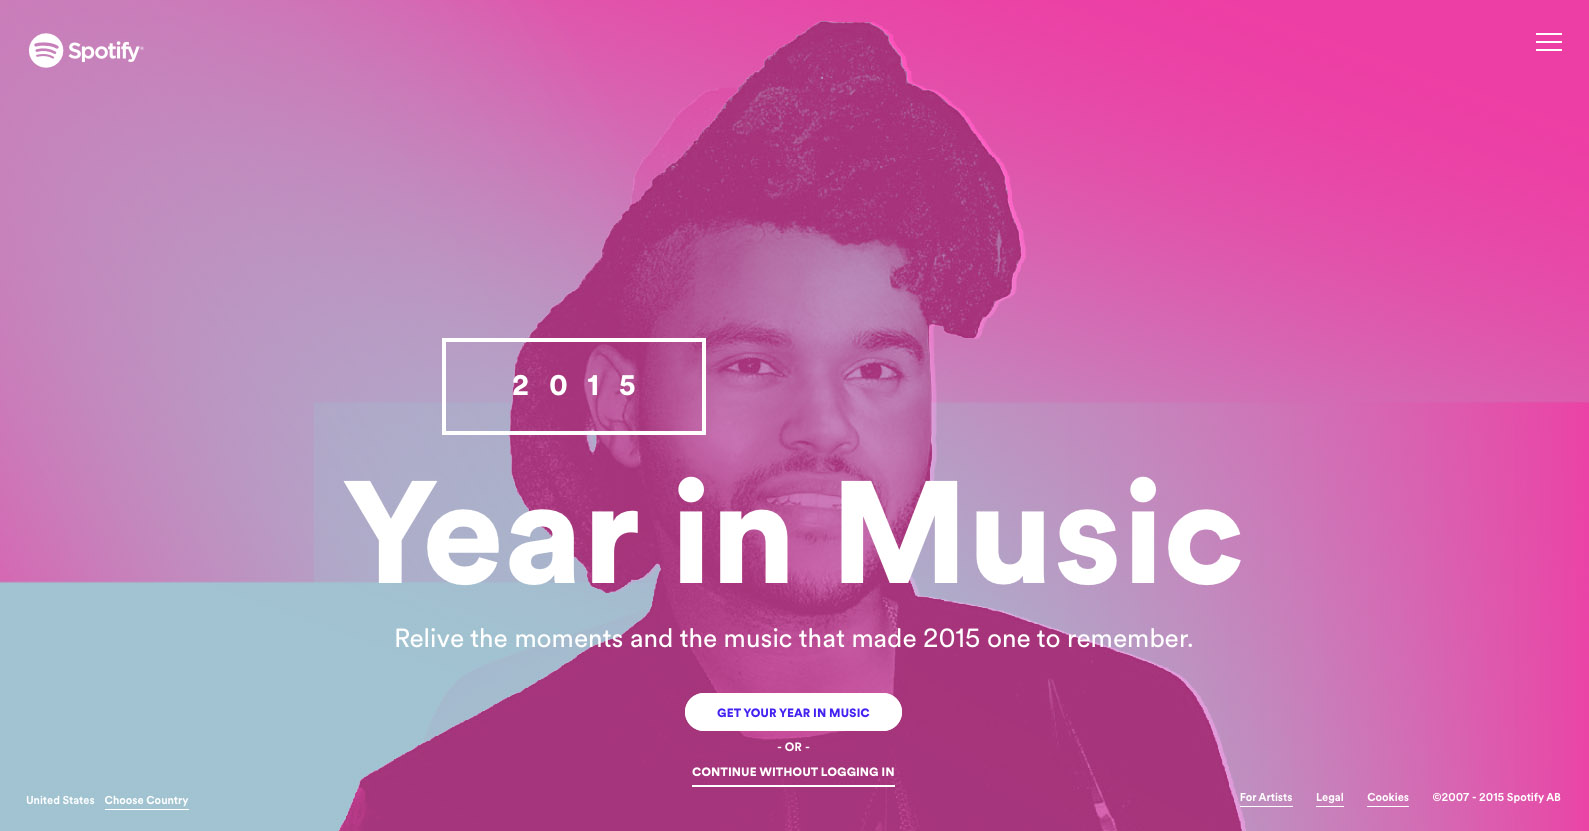 Spotify_YearinMusic201515